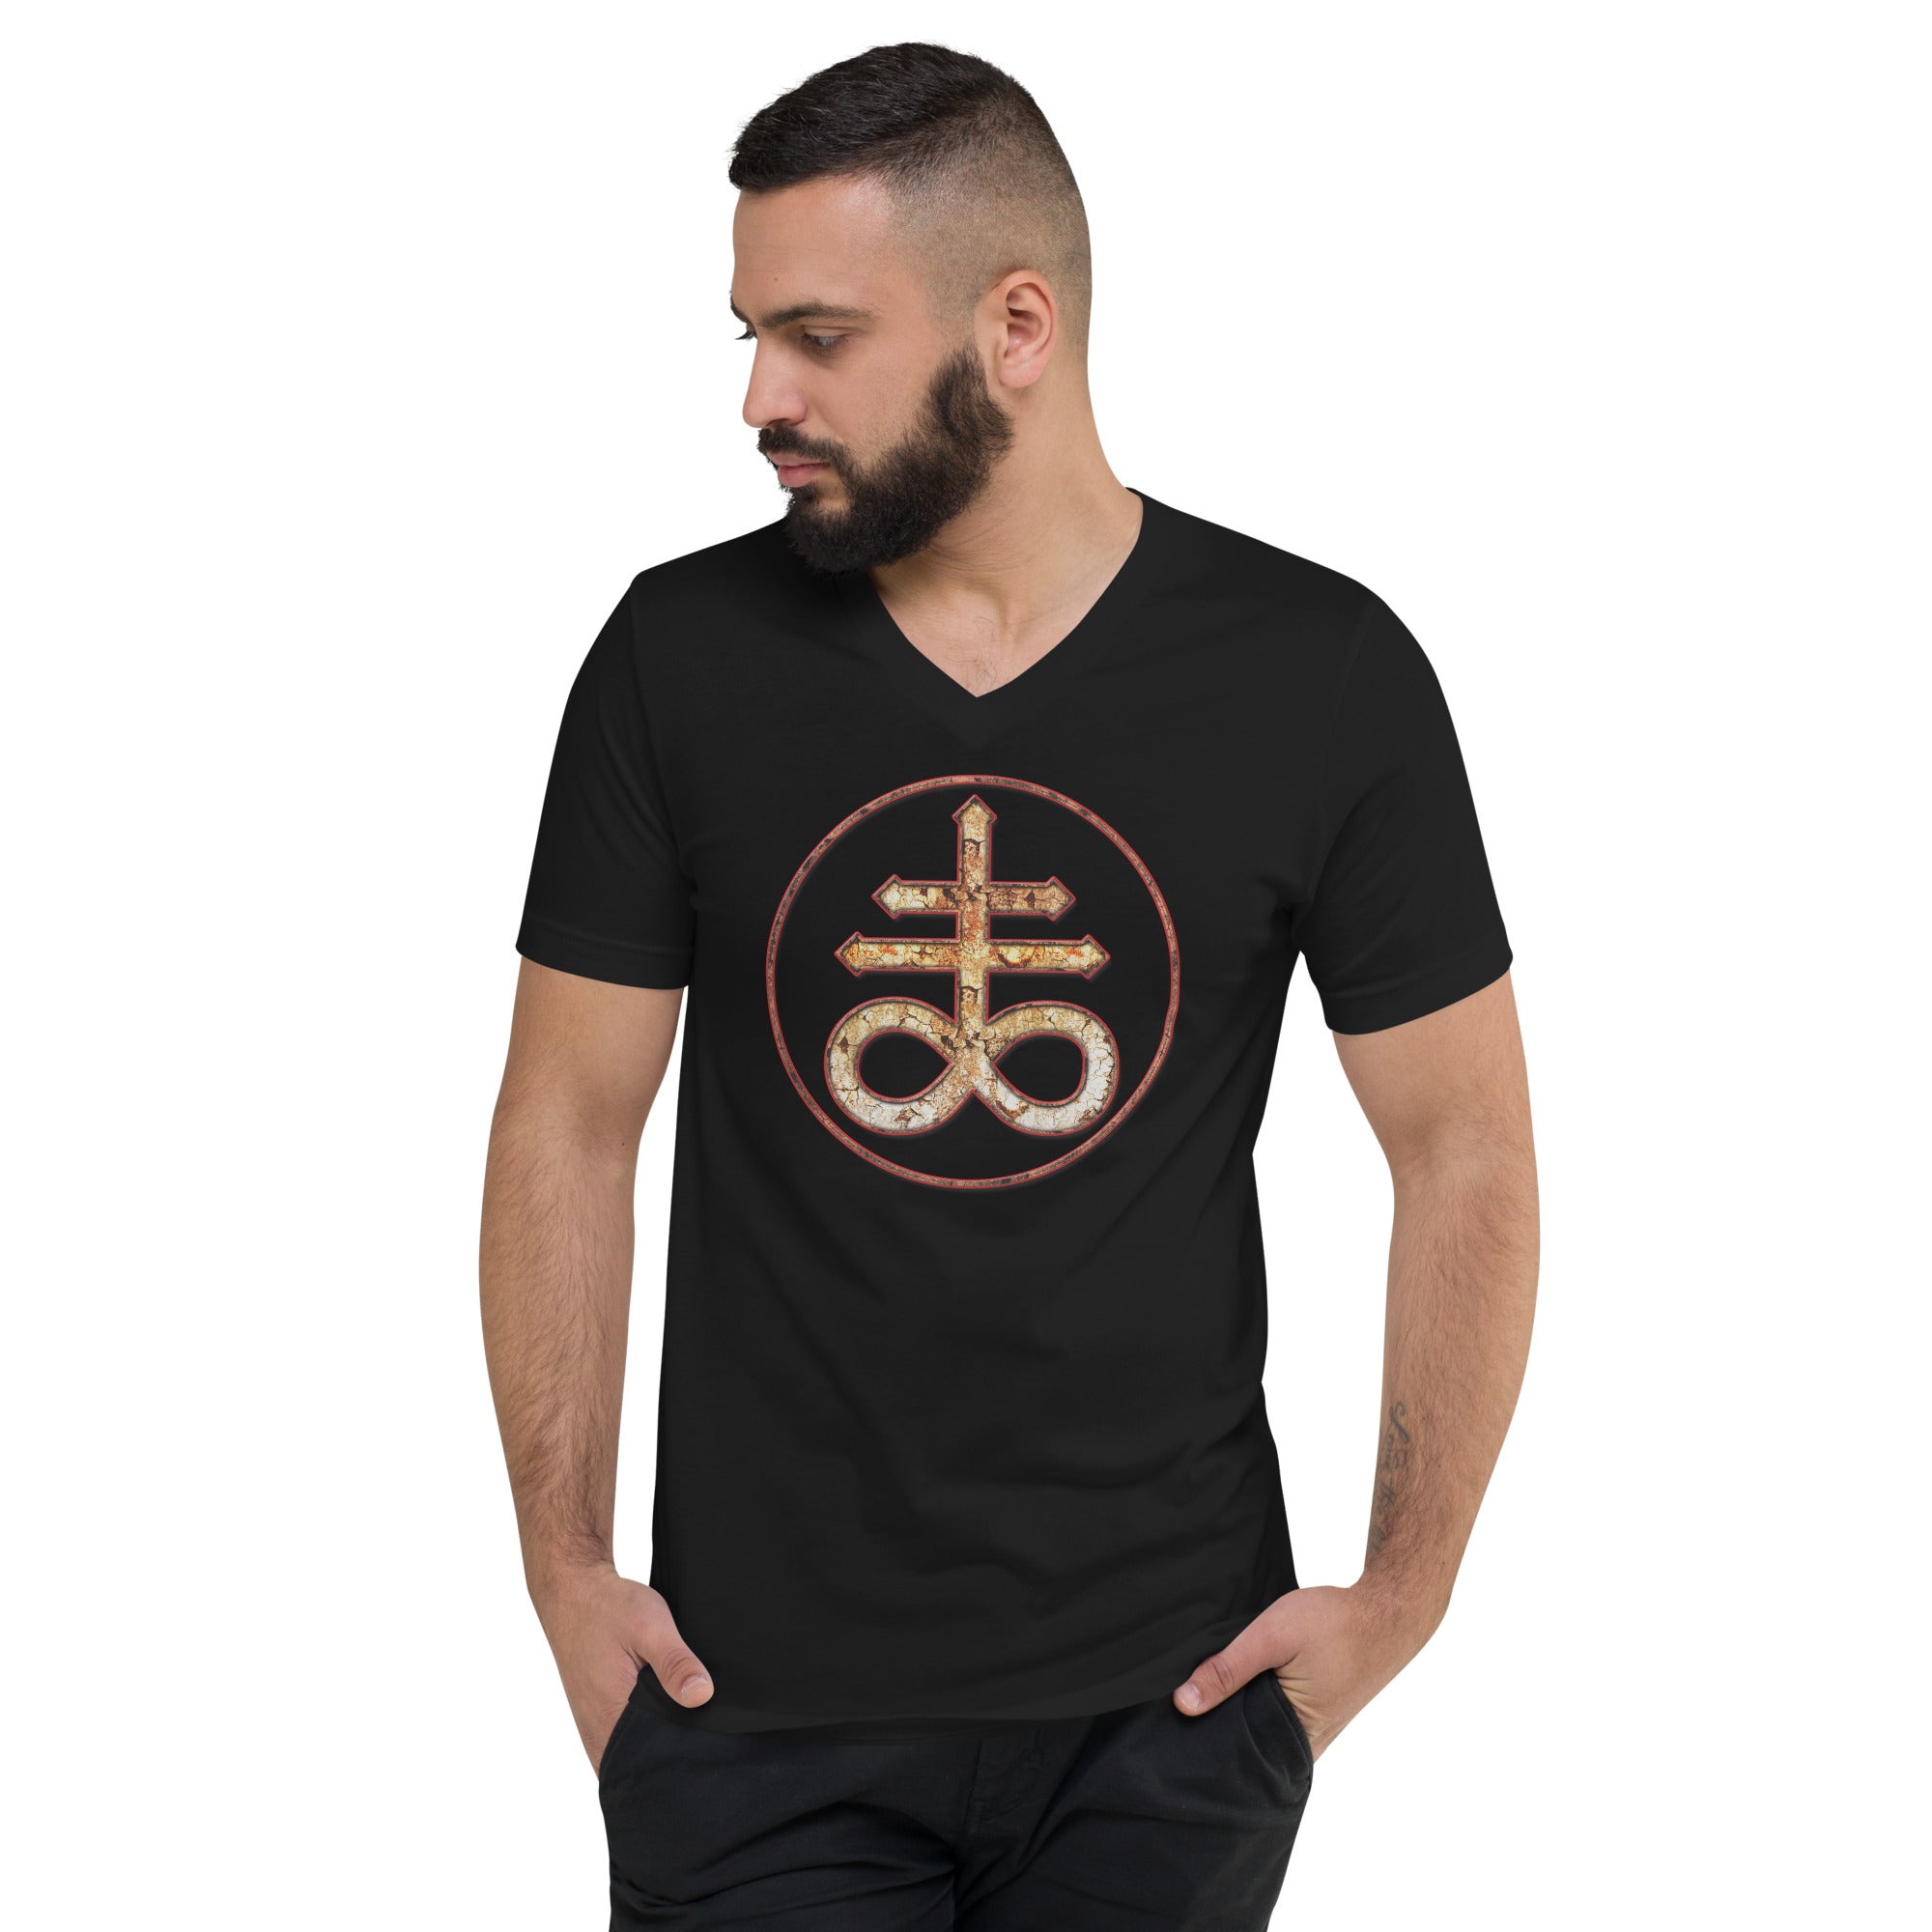 Withered Evil Satan's Cross Leviathan Symbol Short Sleeve V-Neck T-Shirt